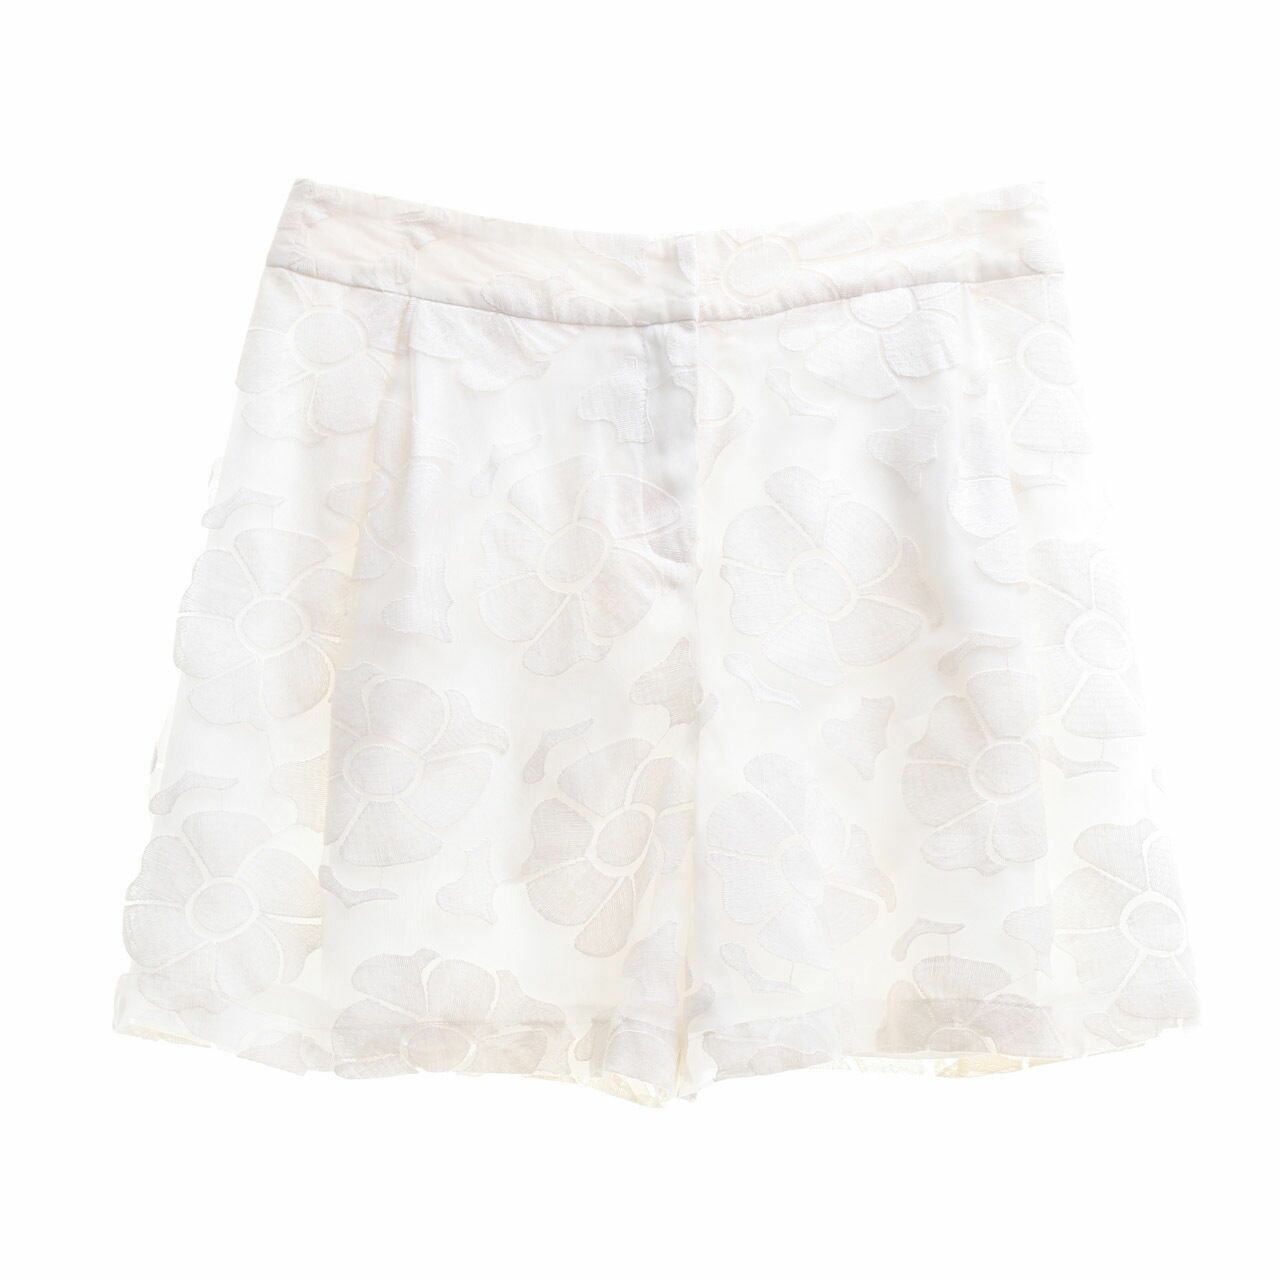 iRoo White Lace Short Pants